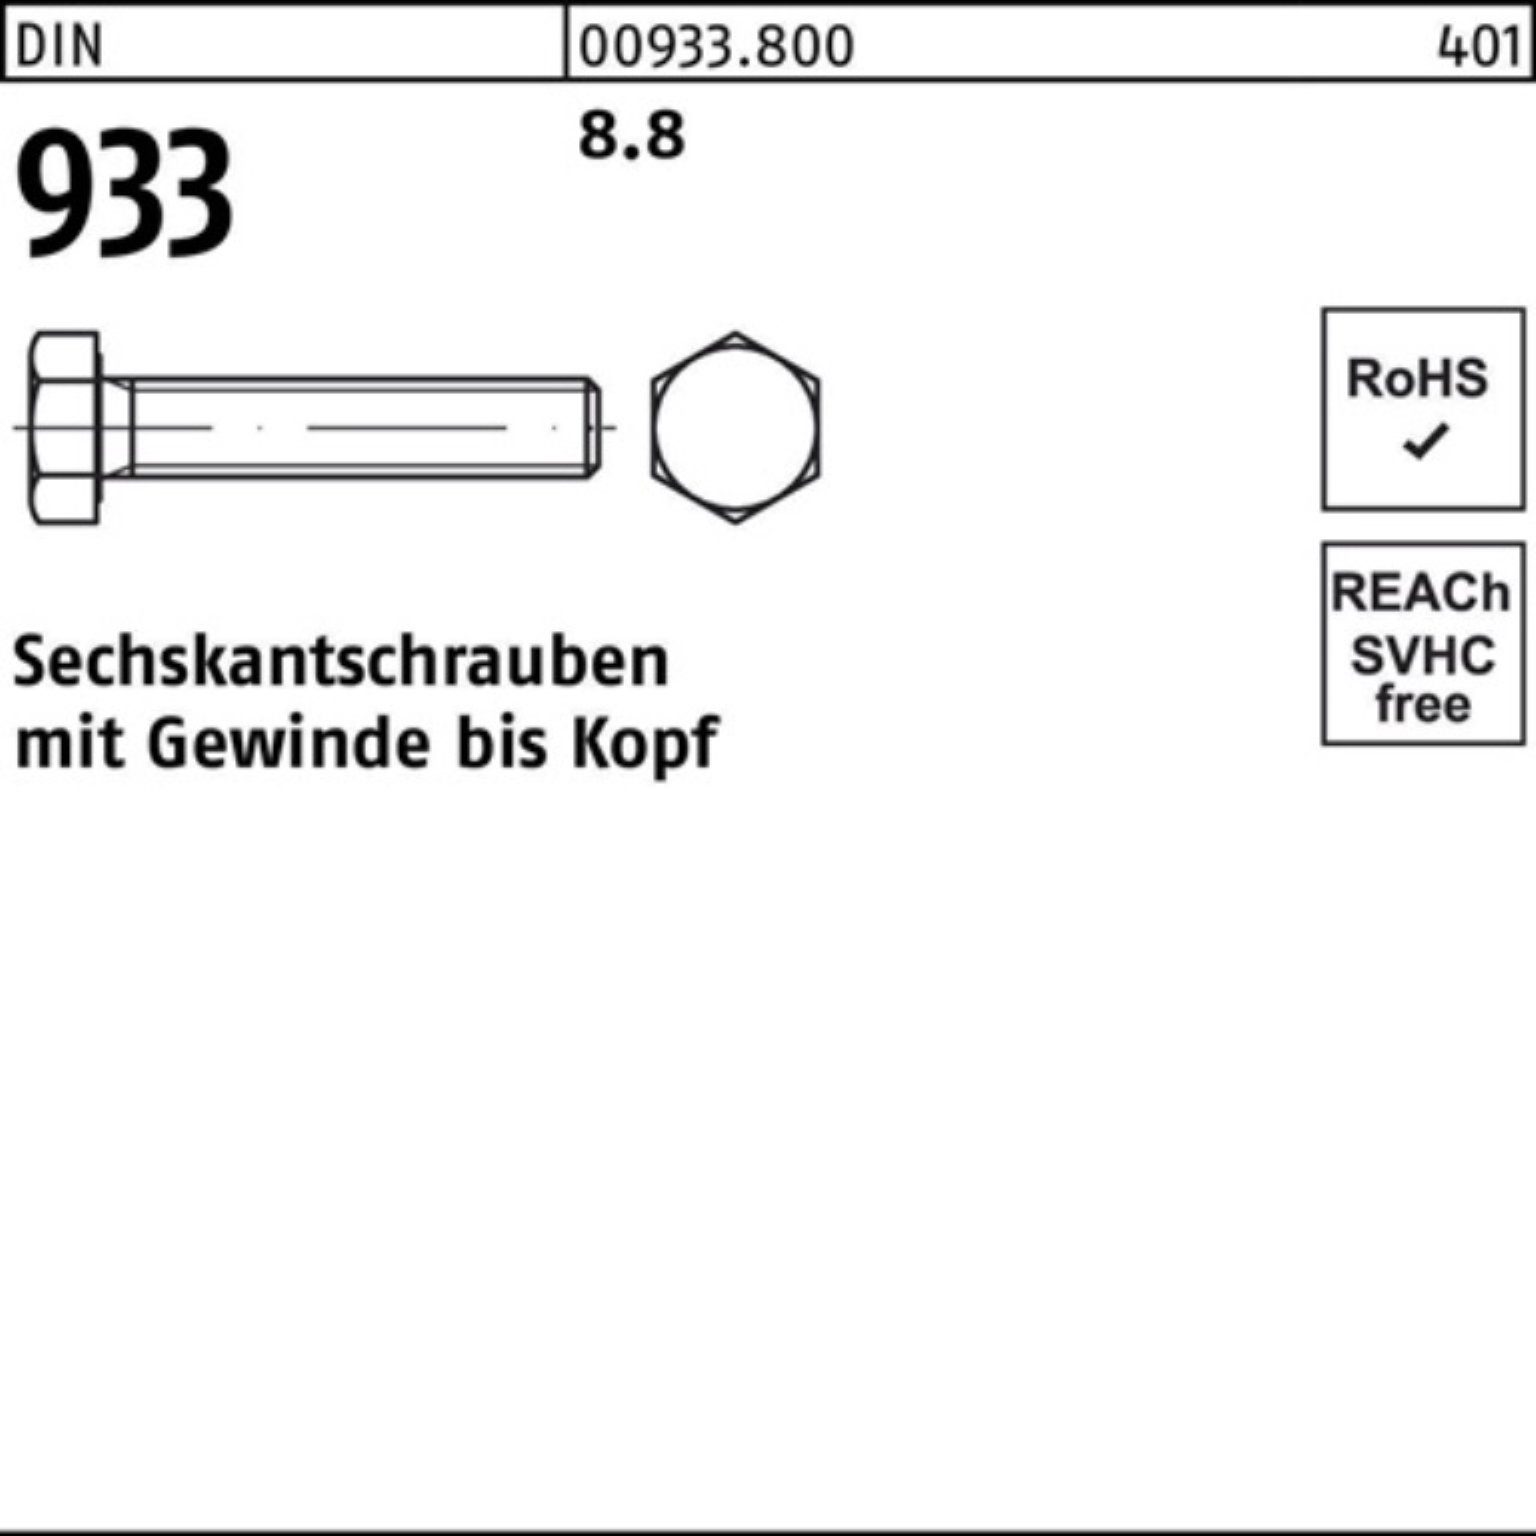 Reyher Sechskantschraube 100er Pack 8.8 DIN VG 933 M14x 50 Stück 933 DIN 110 Sechskantschraube